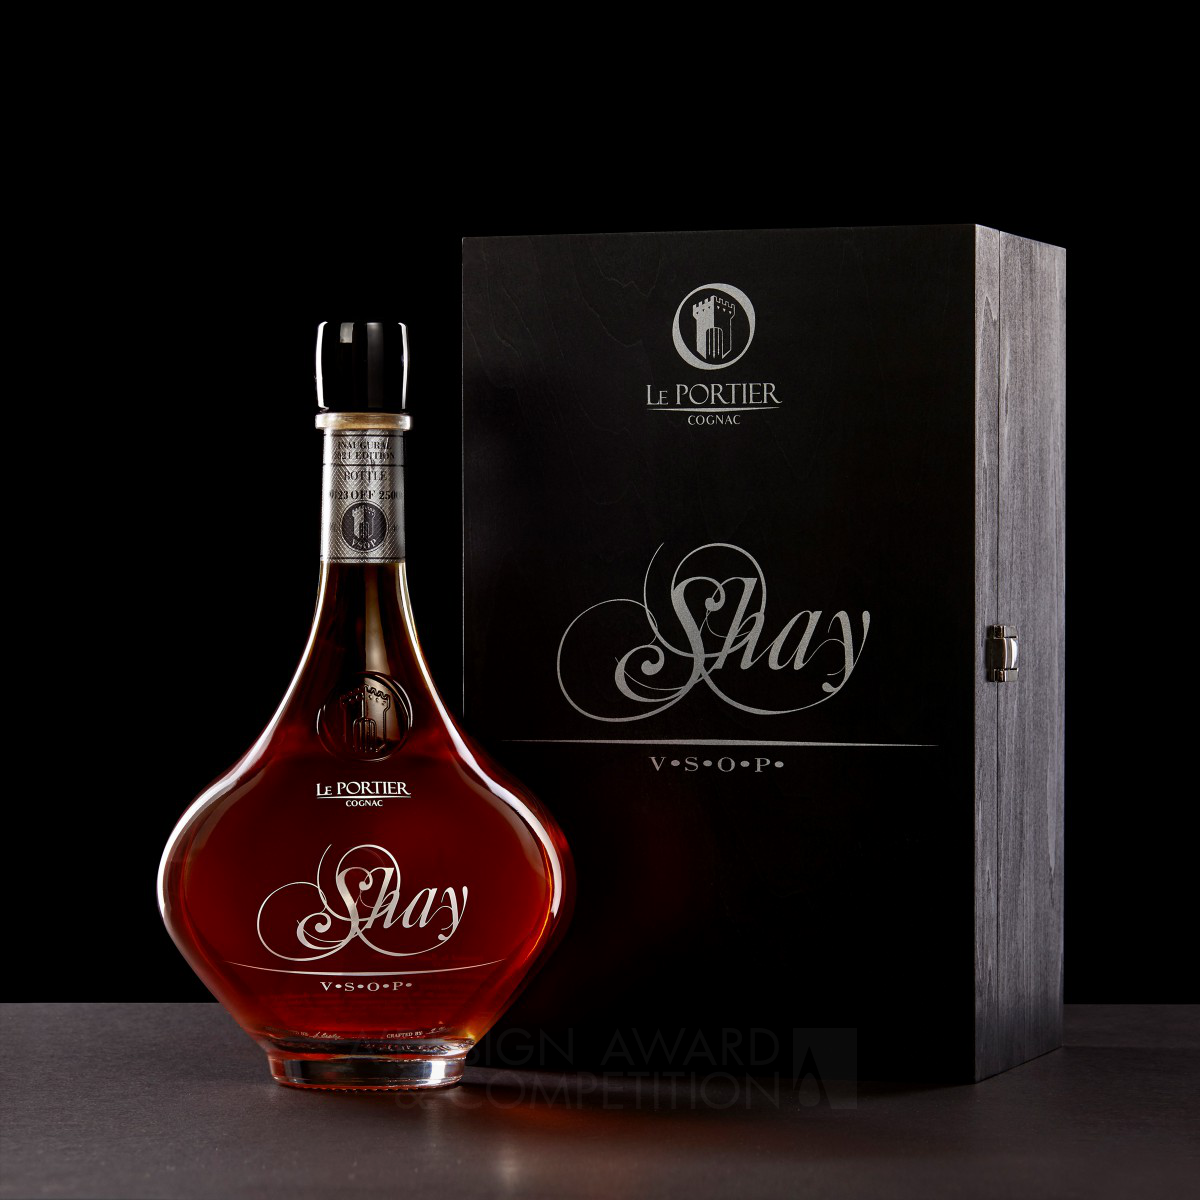 Shay Vsop <b>Luxury Cognac